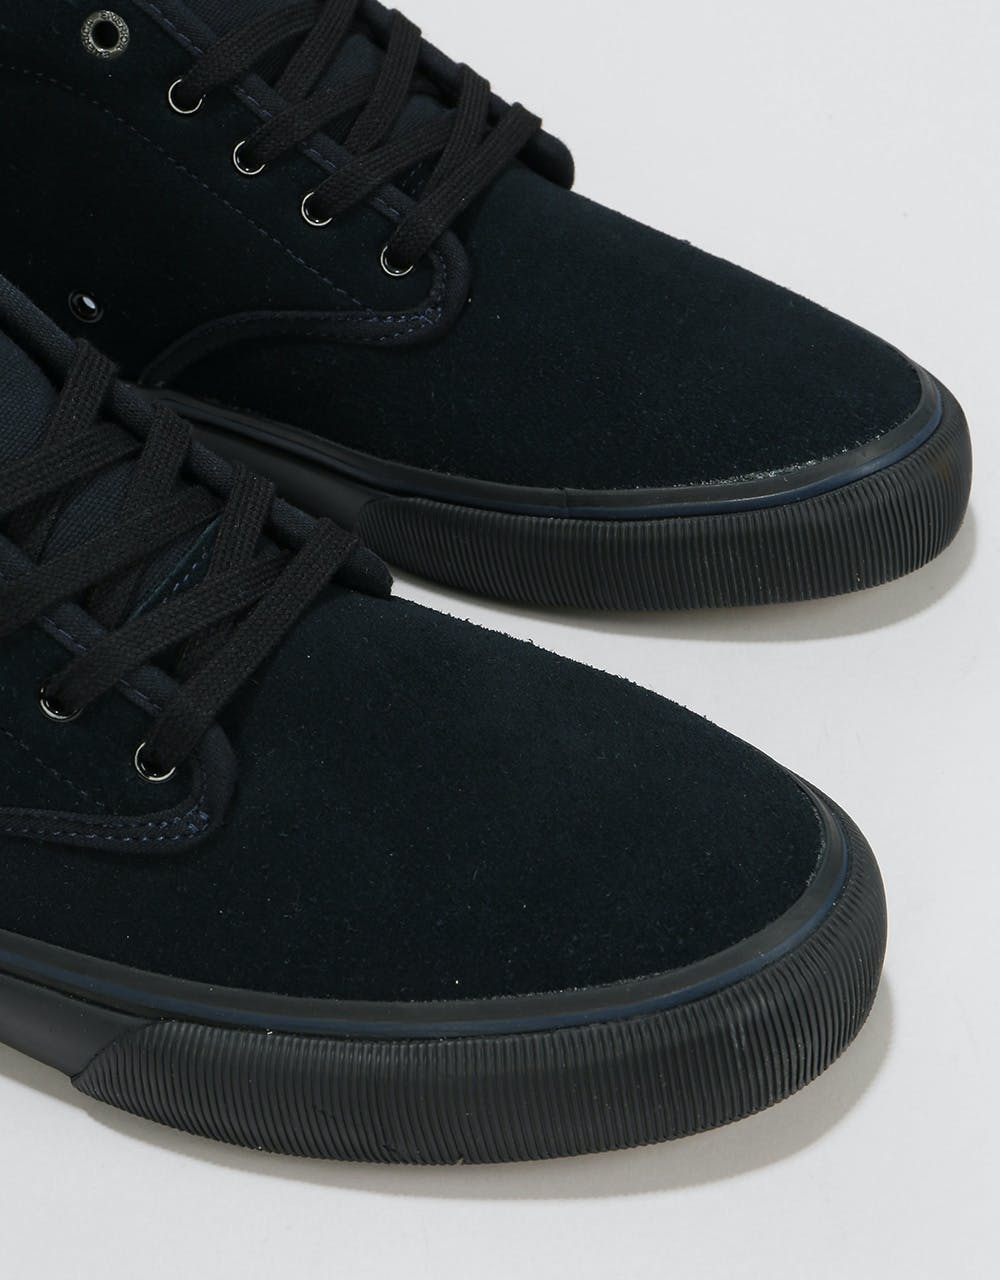 Emerica Wino G6 Mid Skate Shoes - Navy/Black